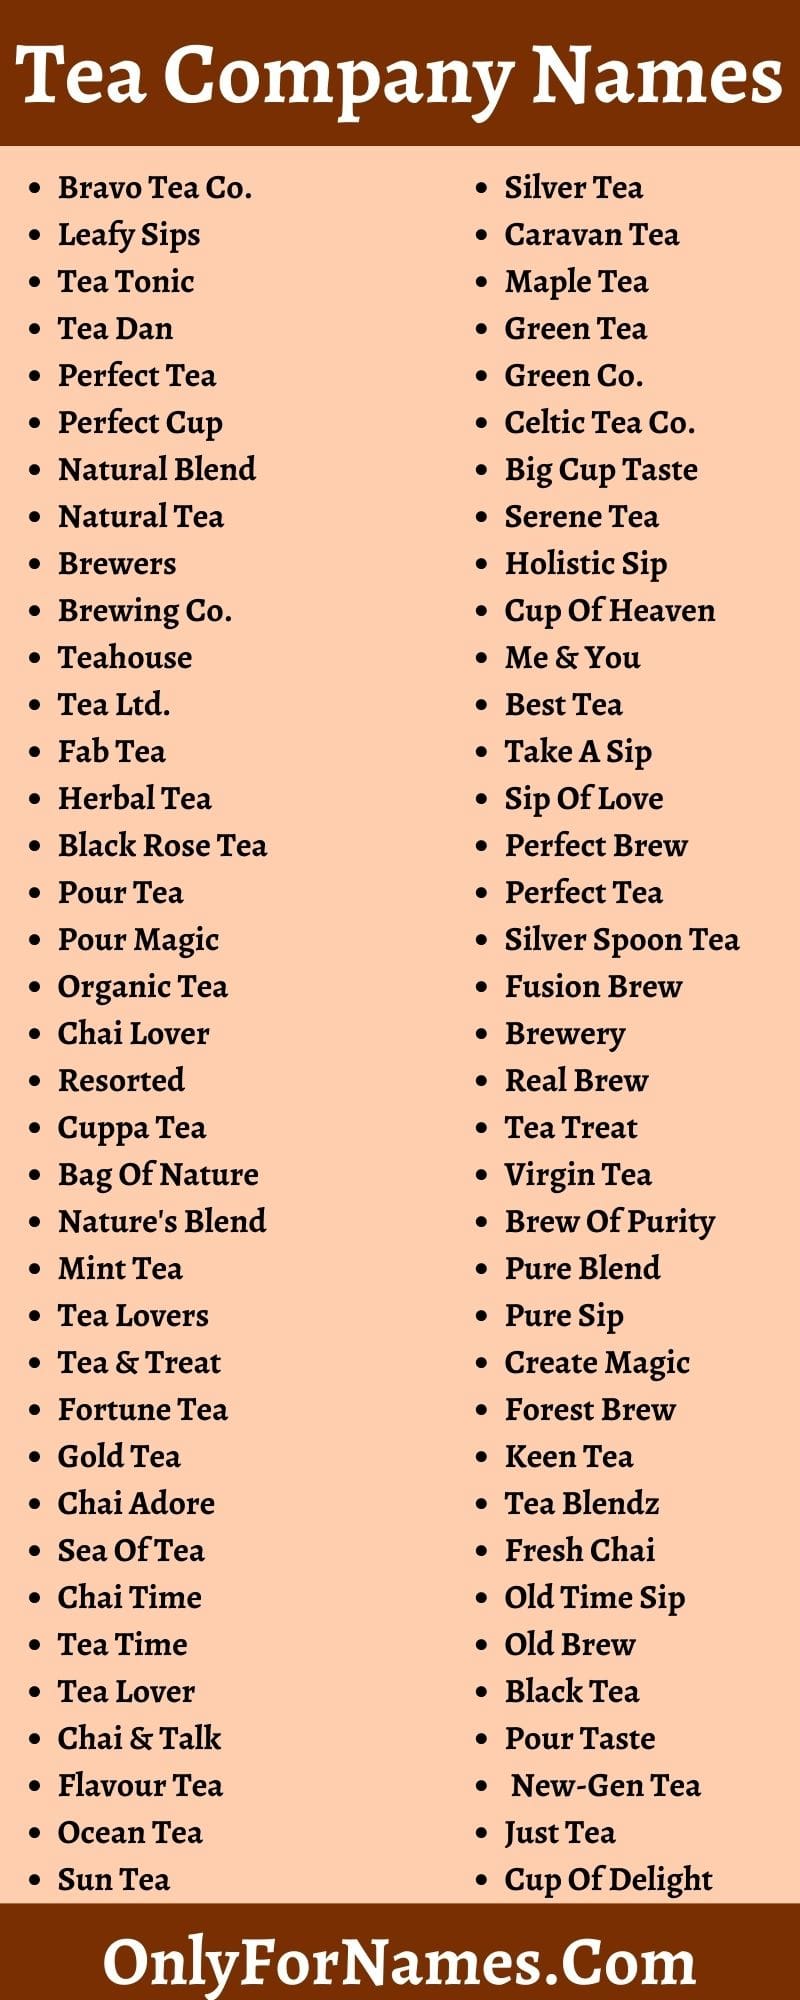 Tea Company Names